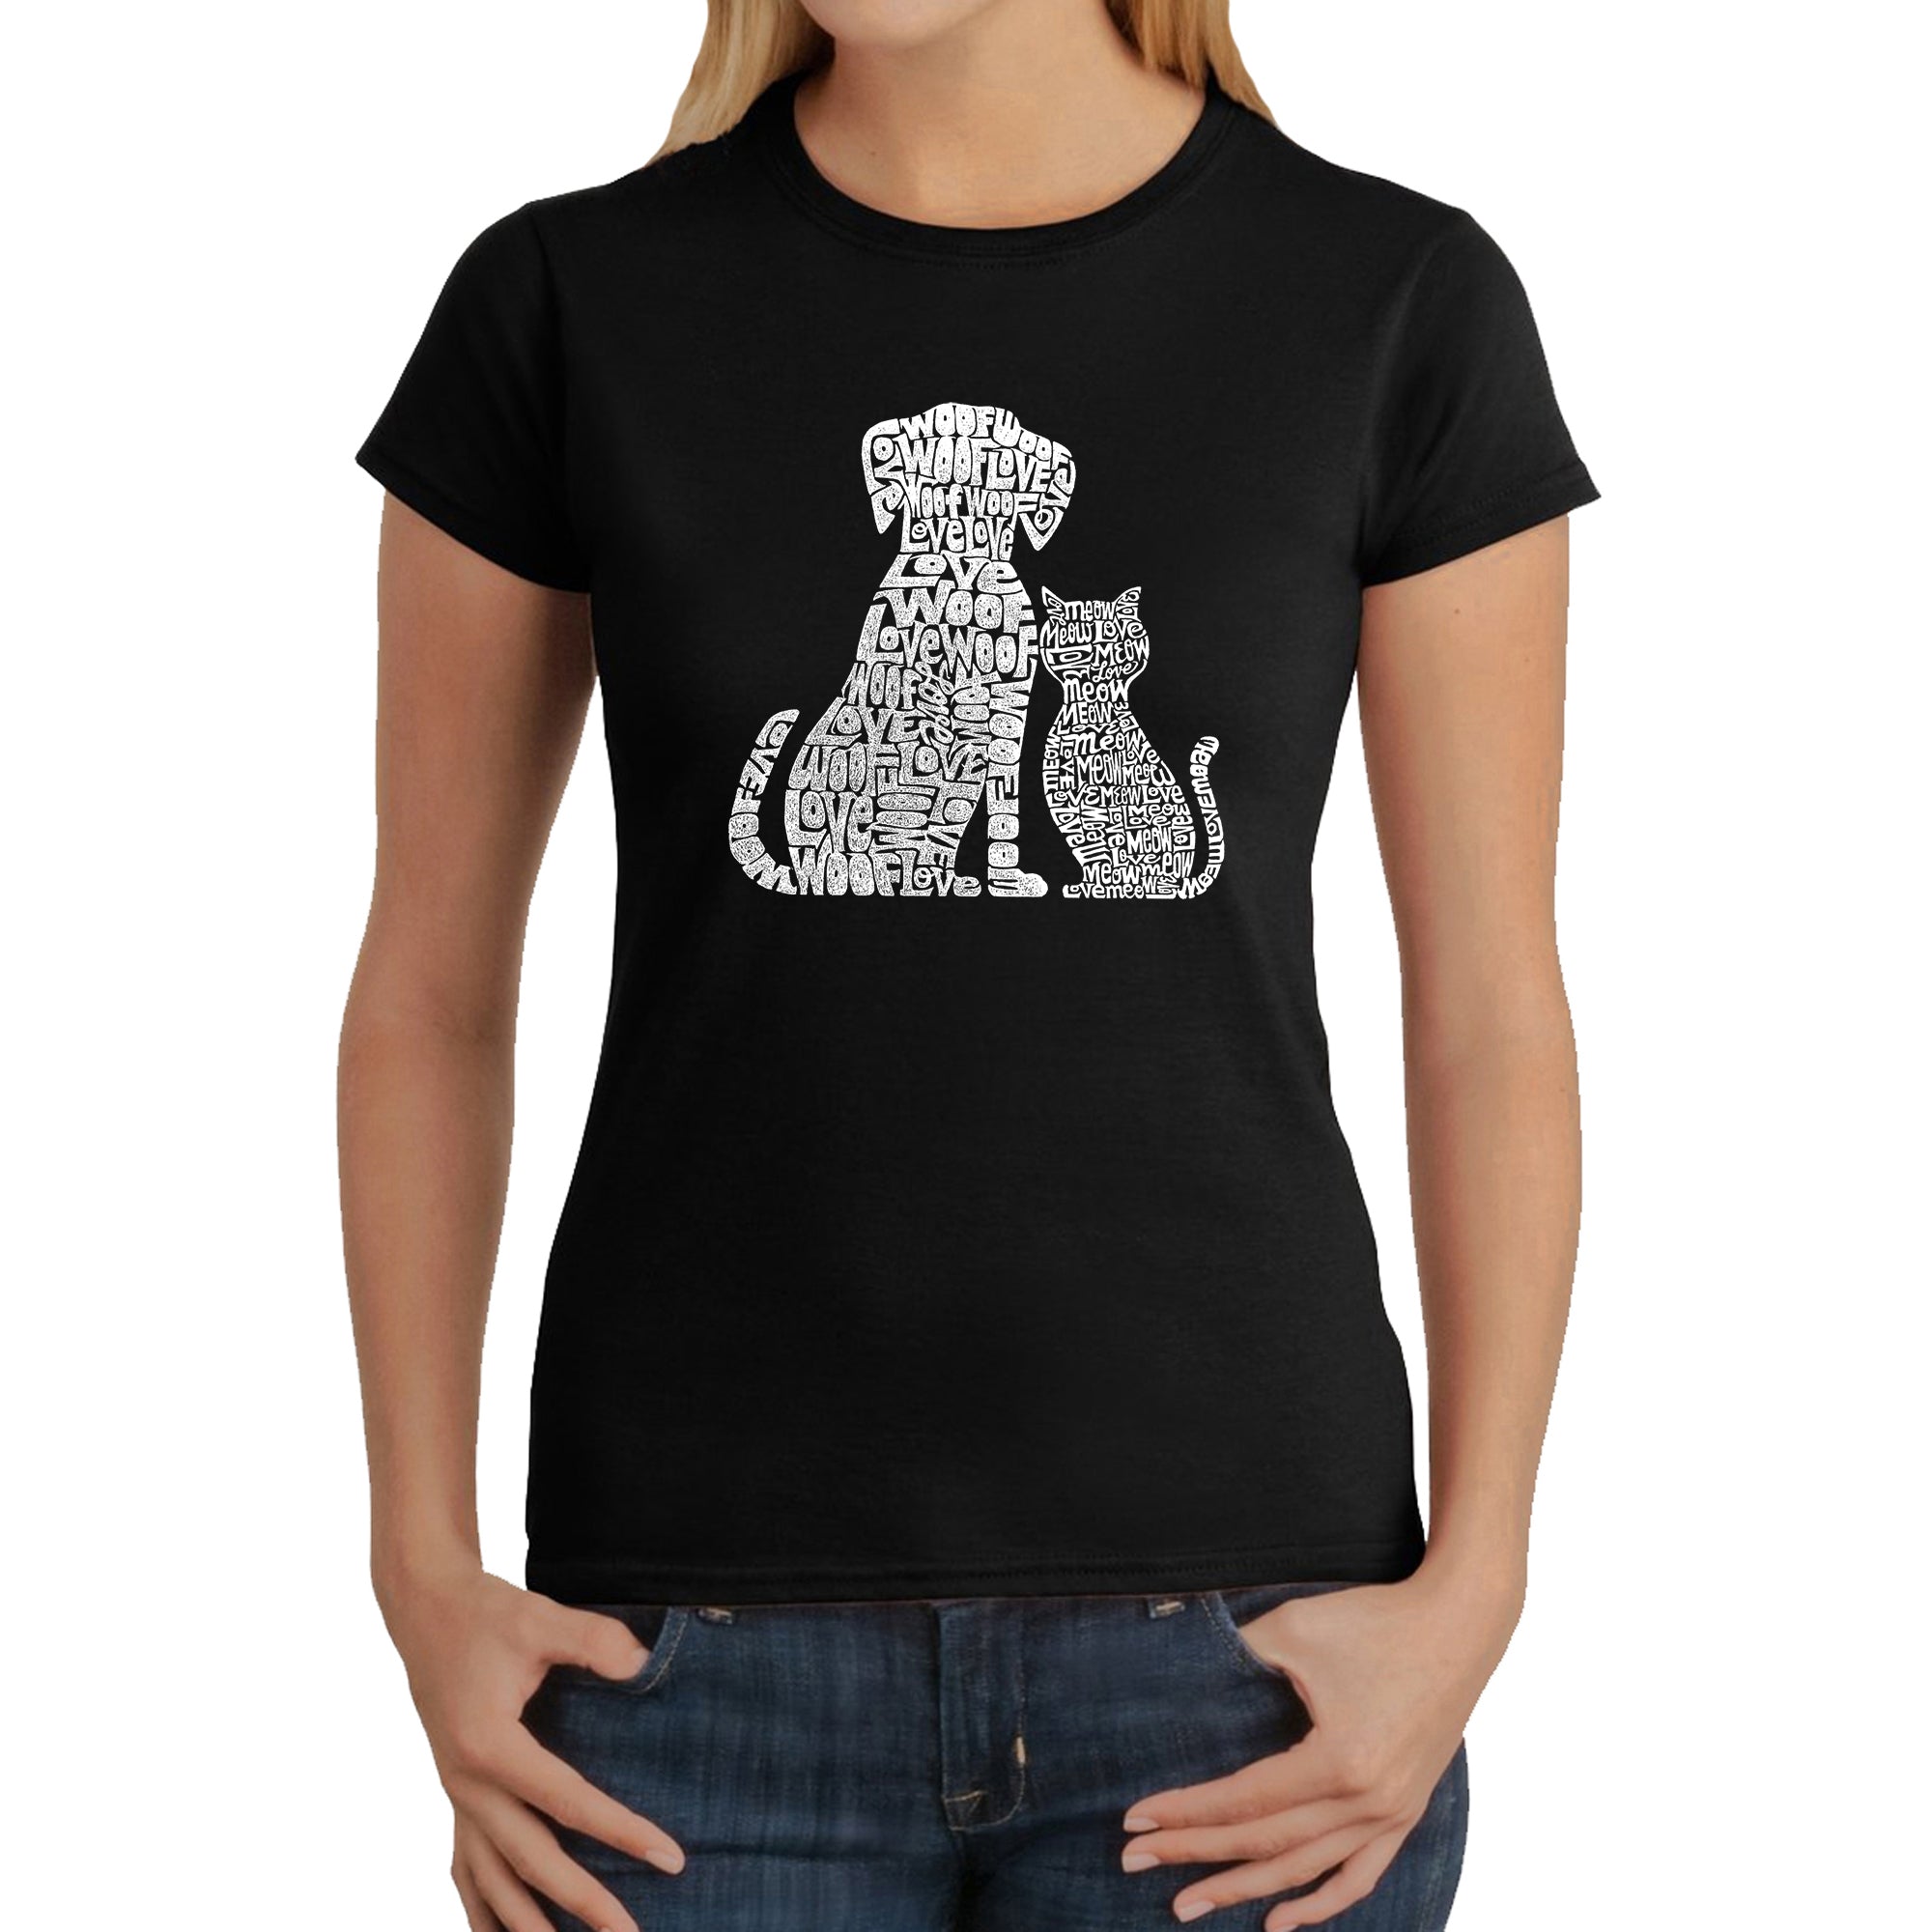 Dogs And Cats - Women's Word Art T-Shirt - Navy - Medium